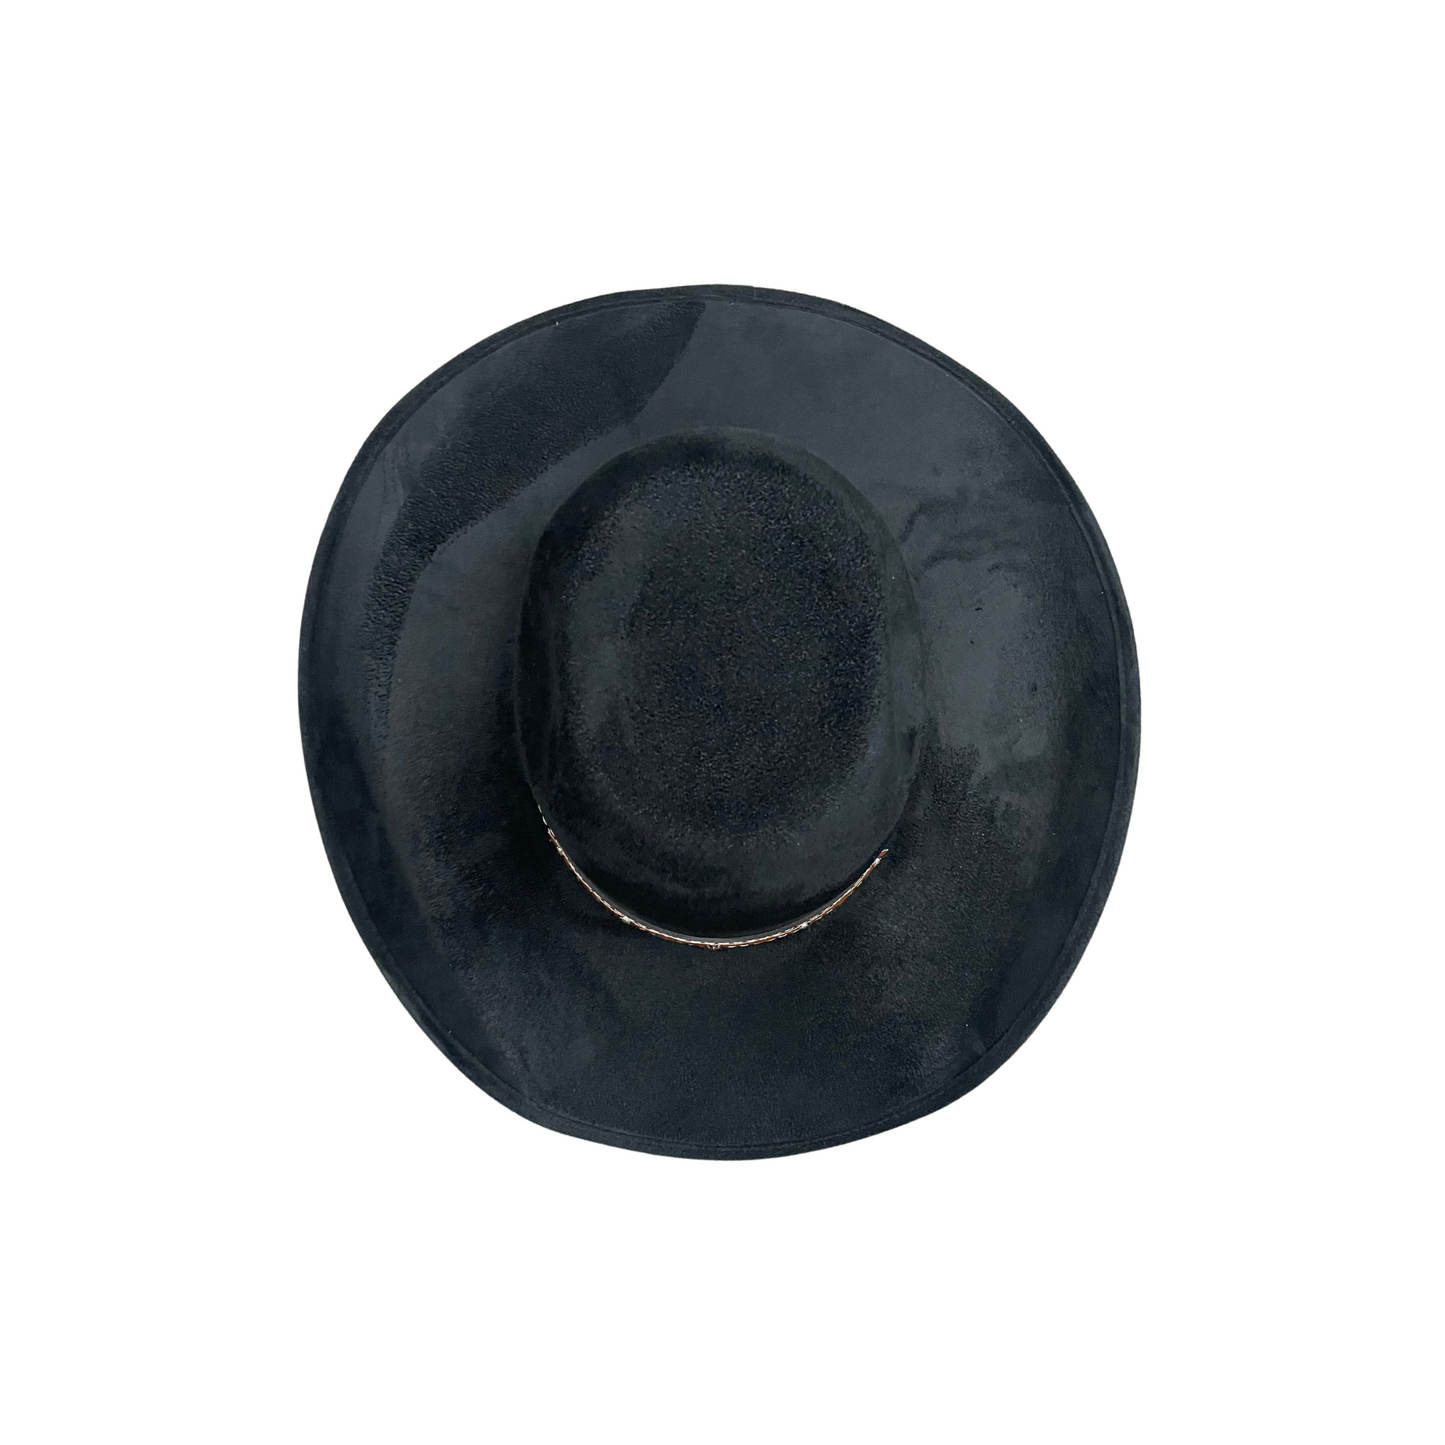 Flat Crown Top Buffalo Cowboy Hat- Black D&D